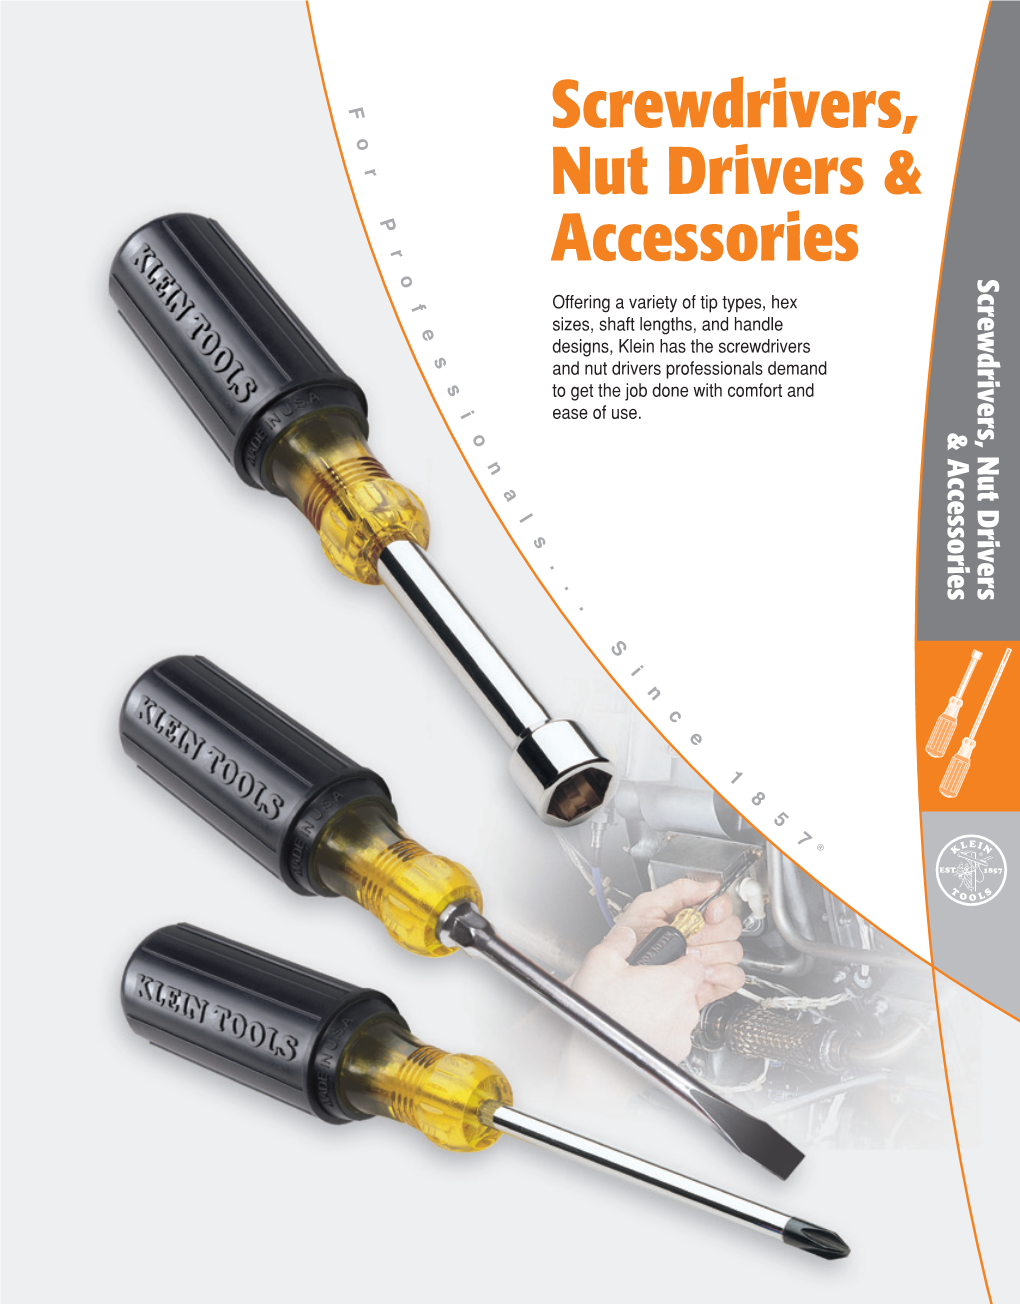 Screwdrivers, Nut Drivers & Accessories